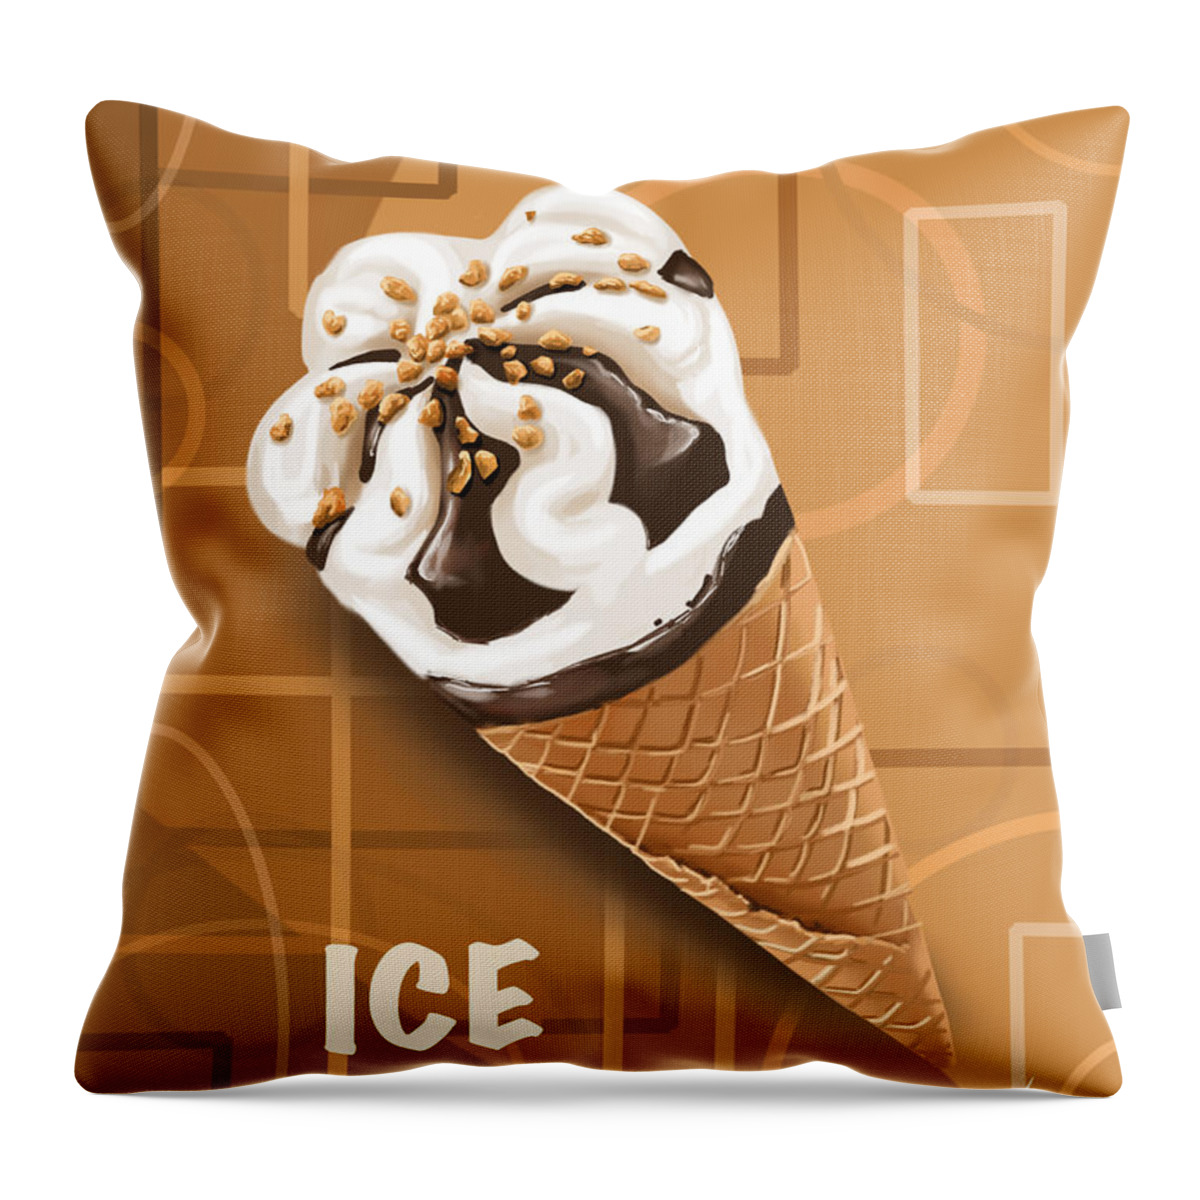 Ipad Throw Pillow featuring the digital art Ice cream by Veronica Minozzi